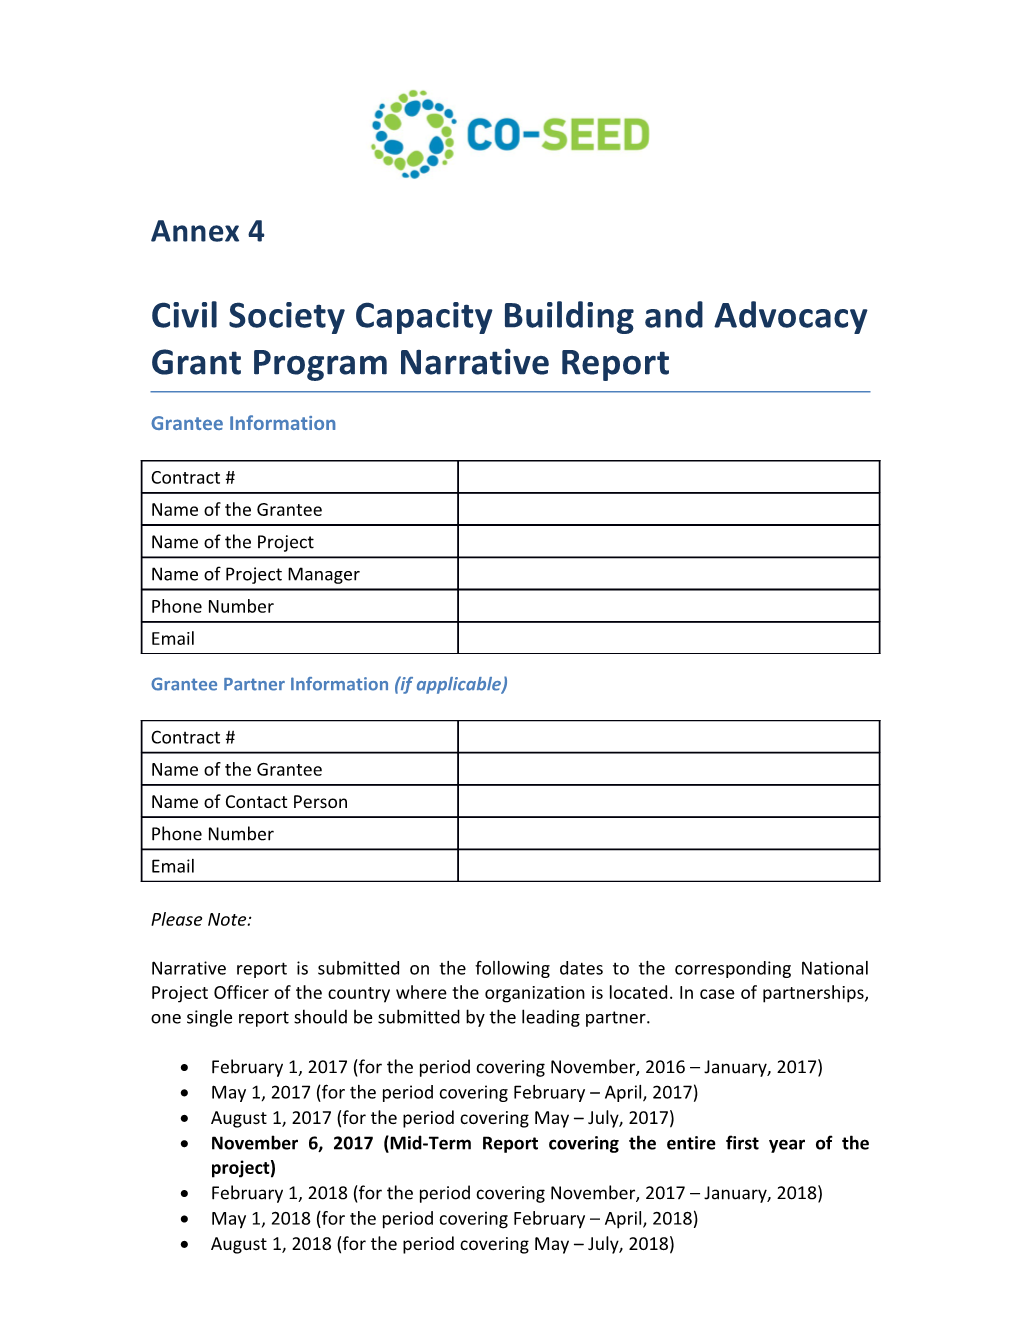 Civil Society Capacity Building and Advocacy